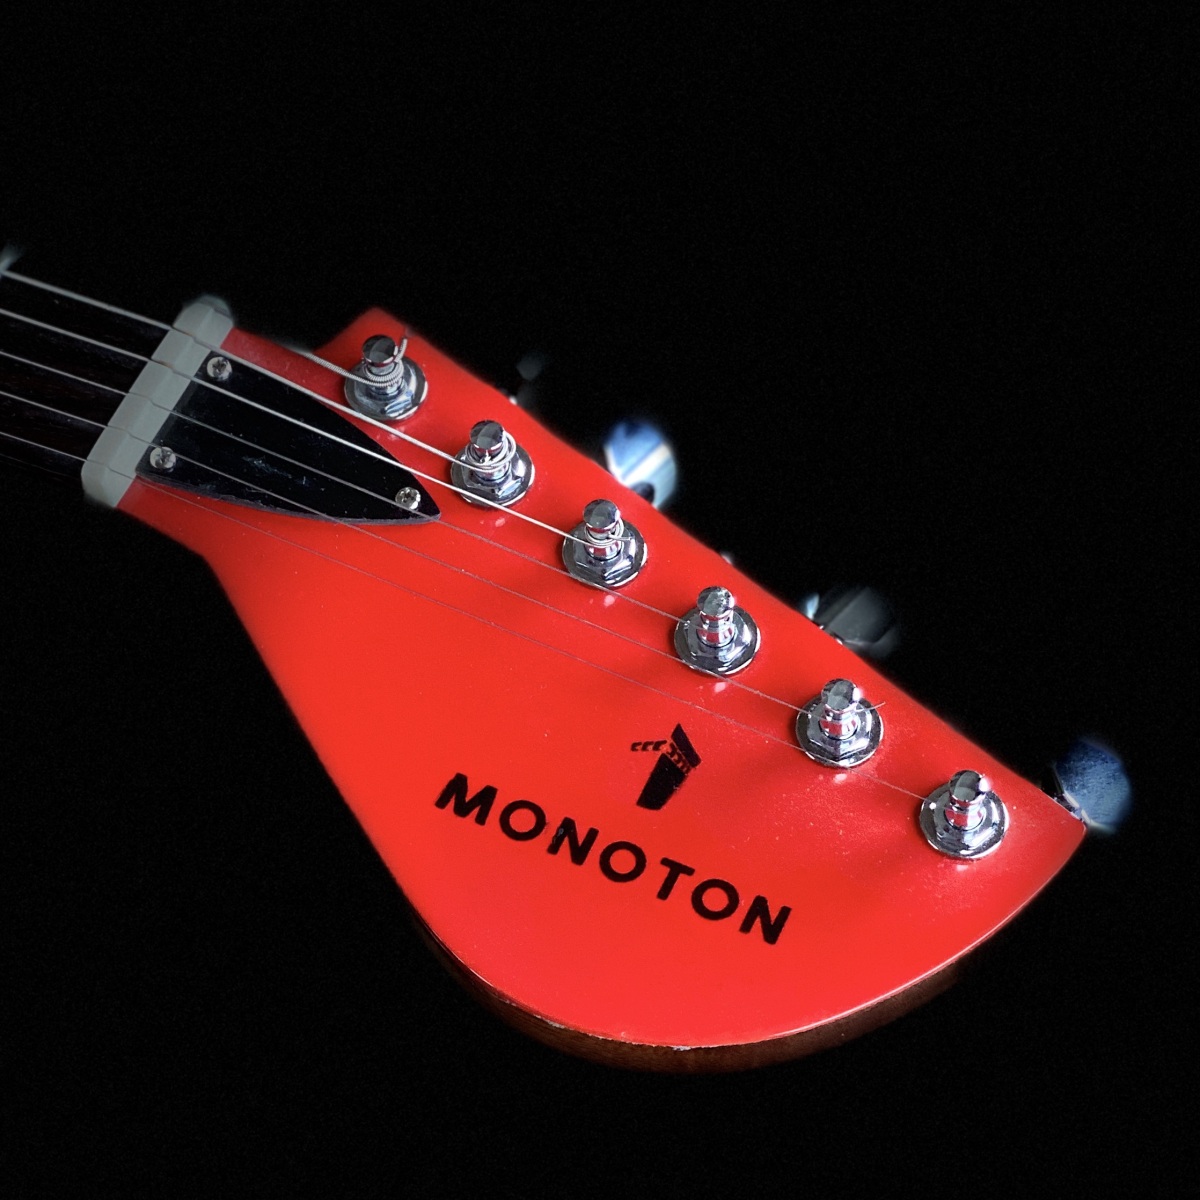 Monoton RedSkirt Guitar neck